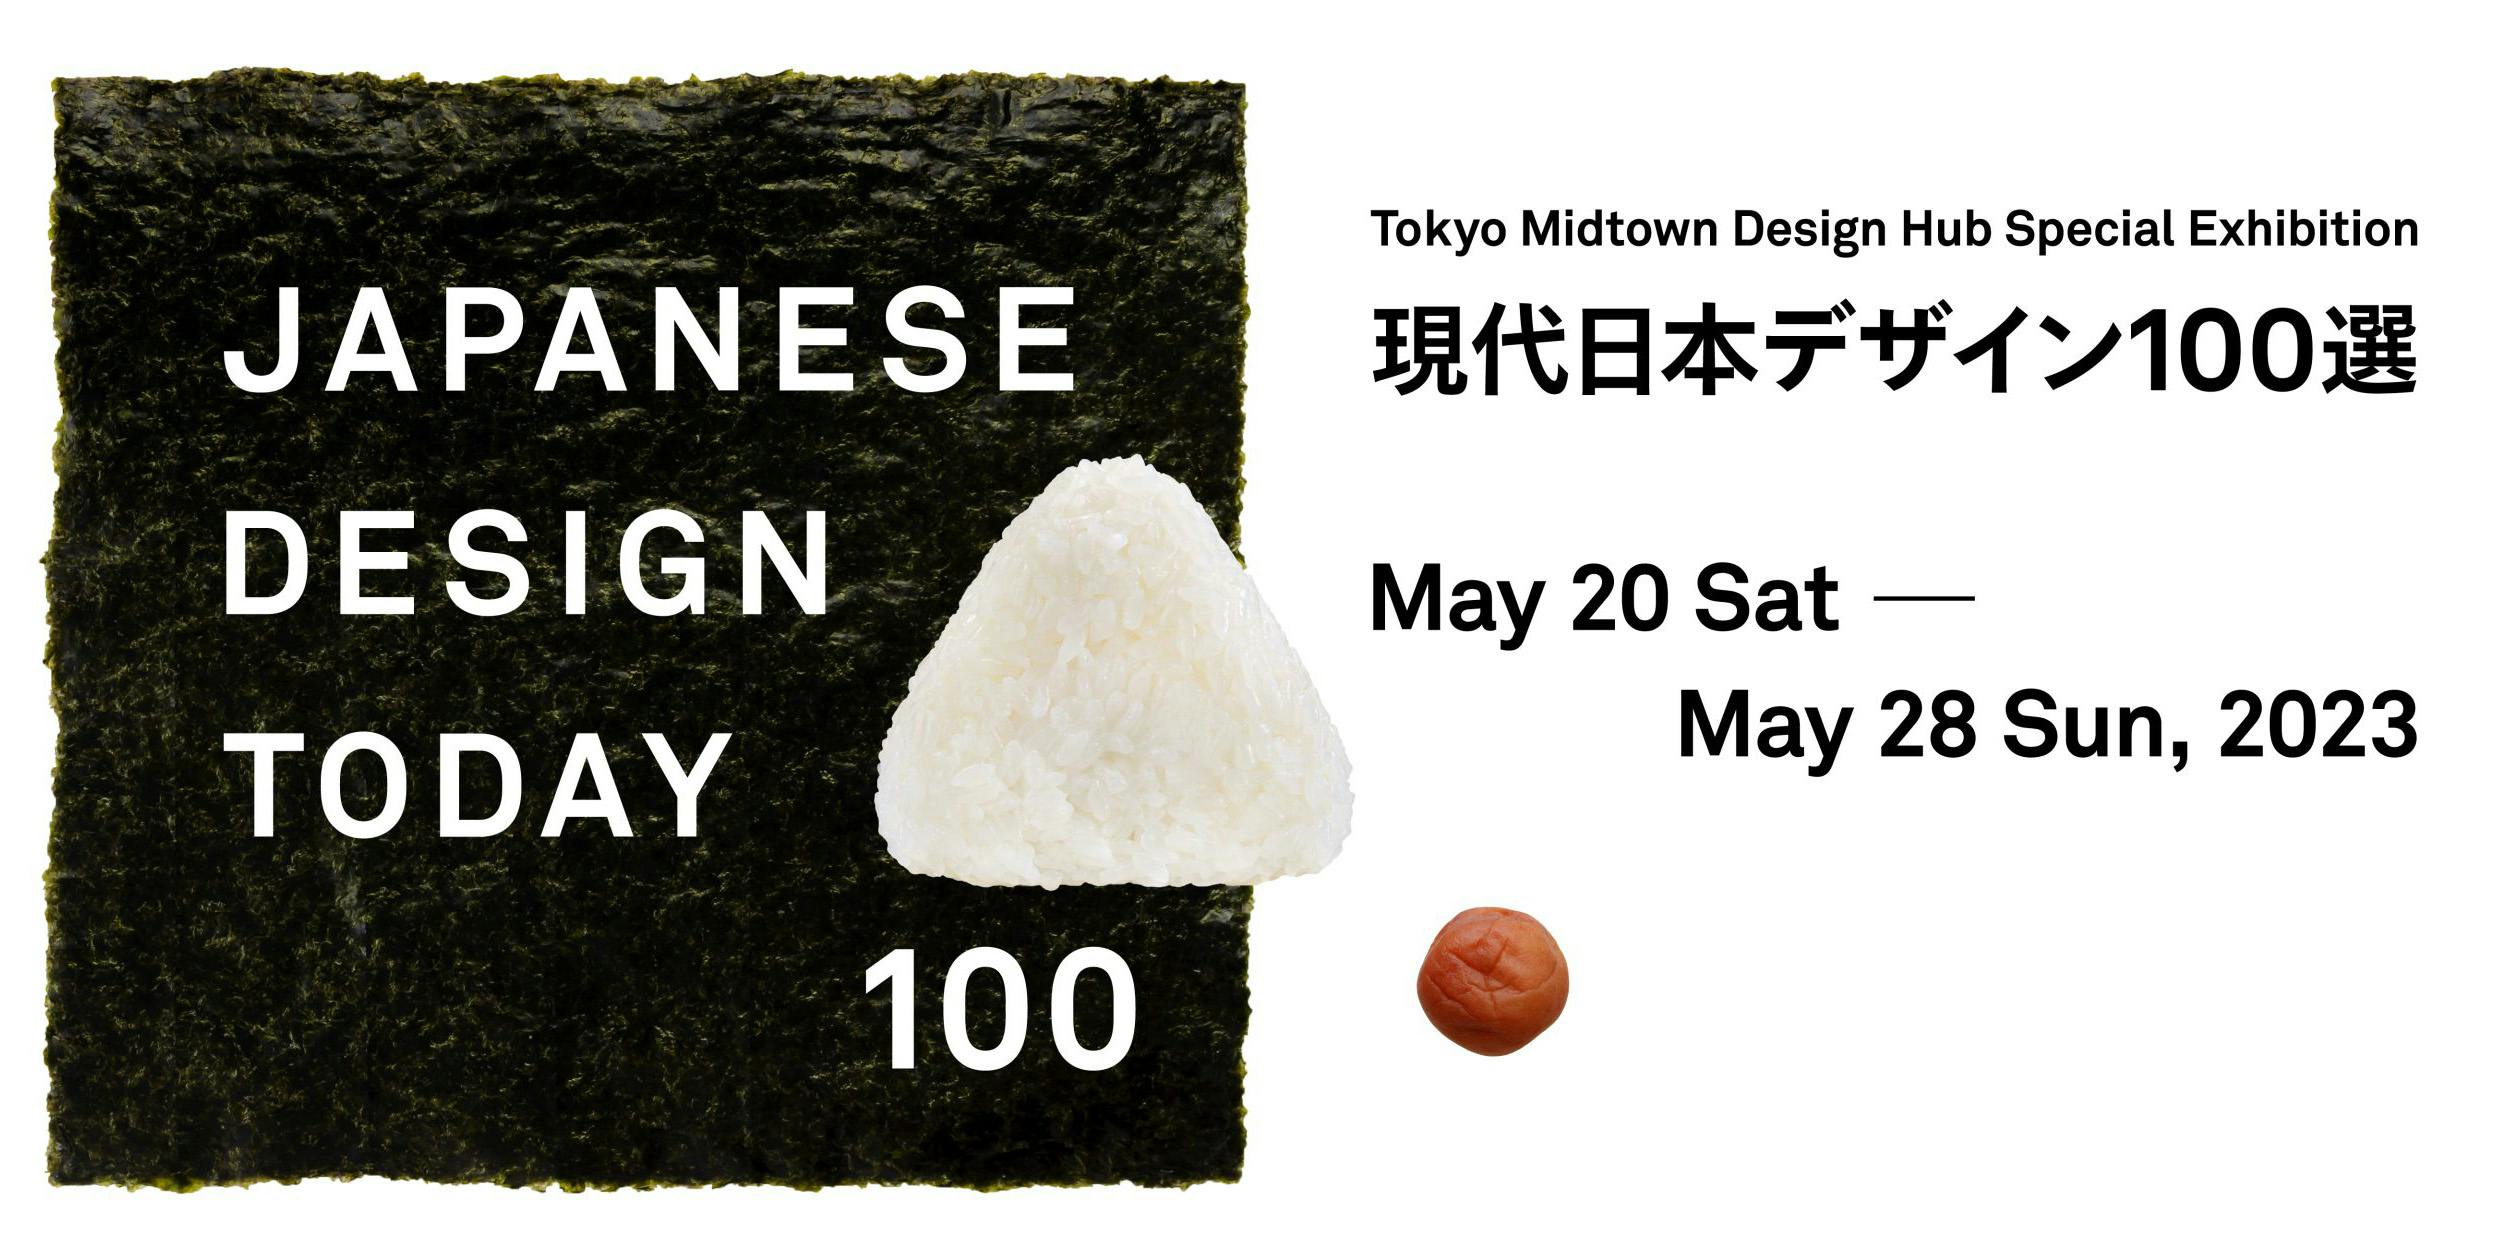 「Japanese Design Today 100(現代日本デザイン100選)」